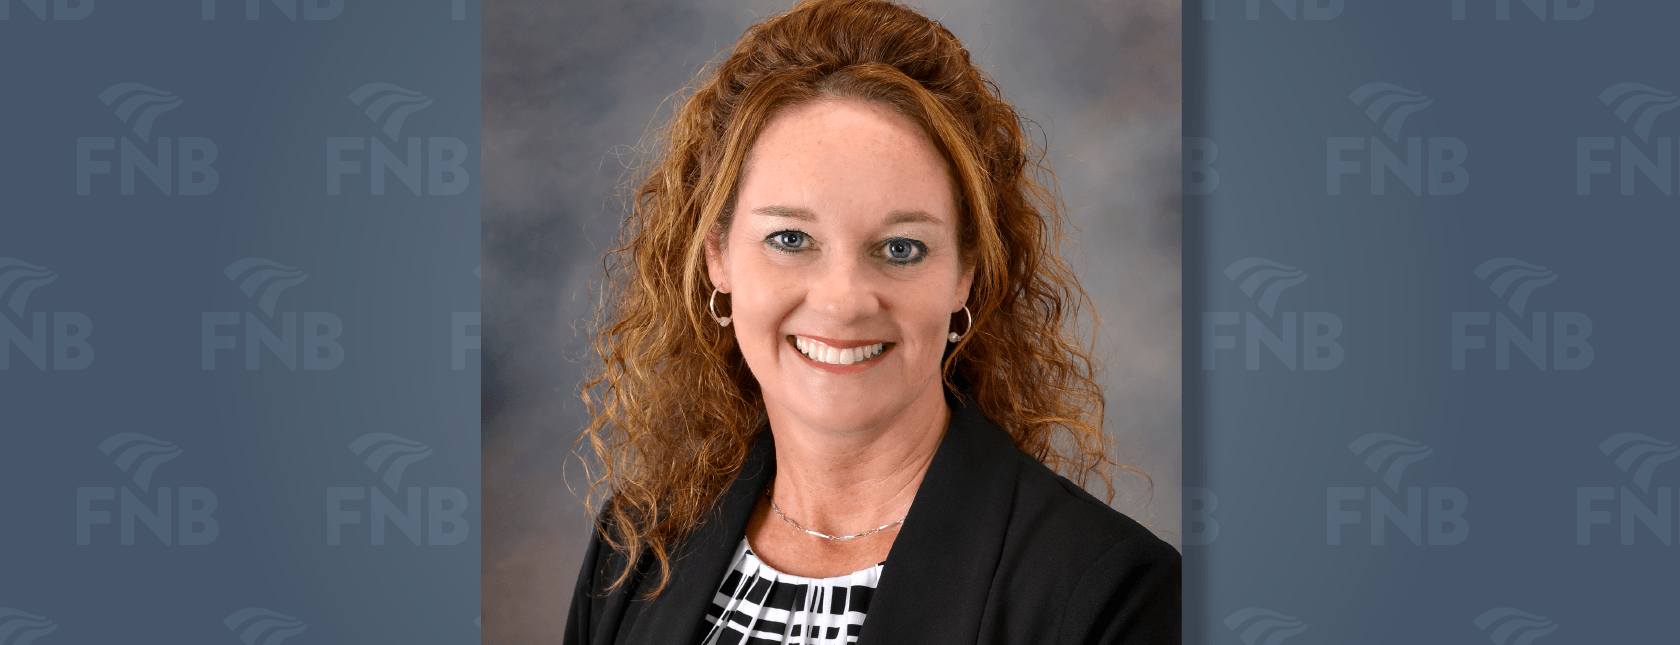 Lori Noel Named Executive Vice President for FNB Bank